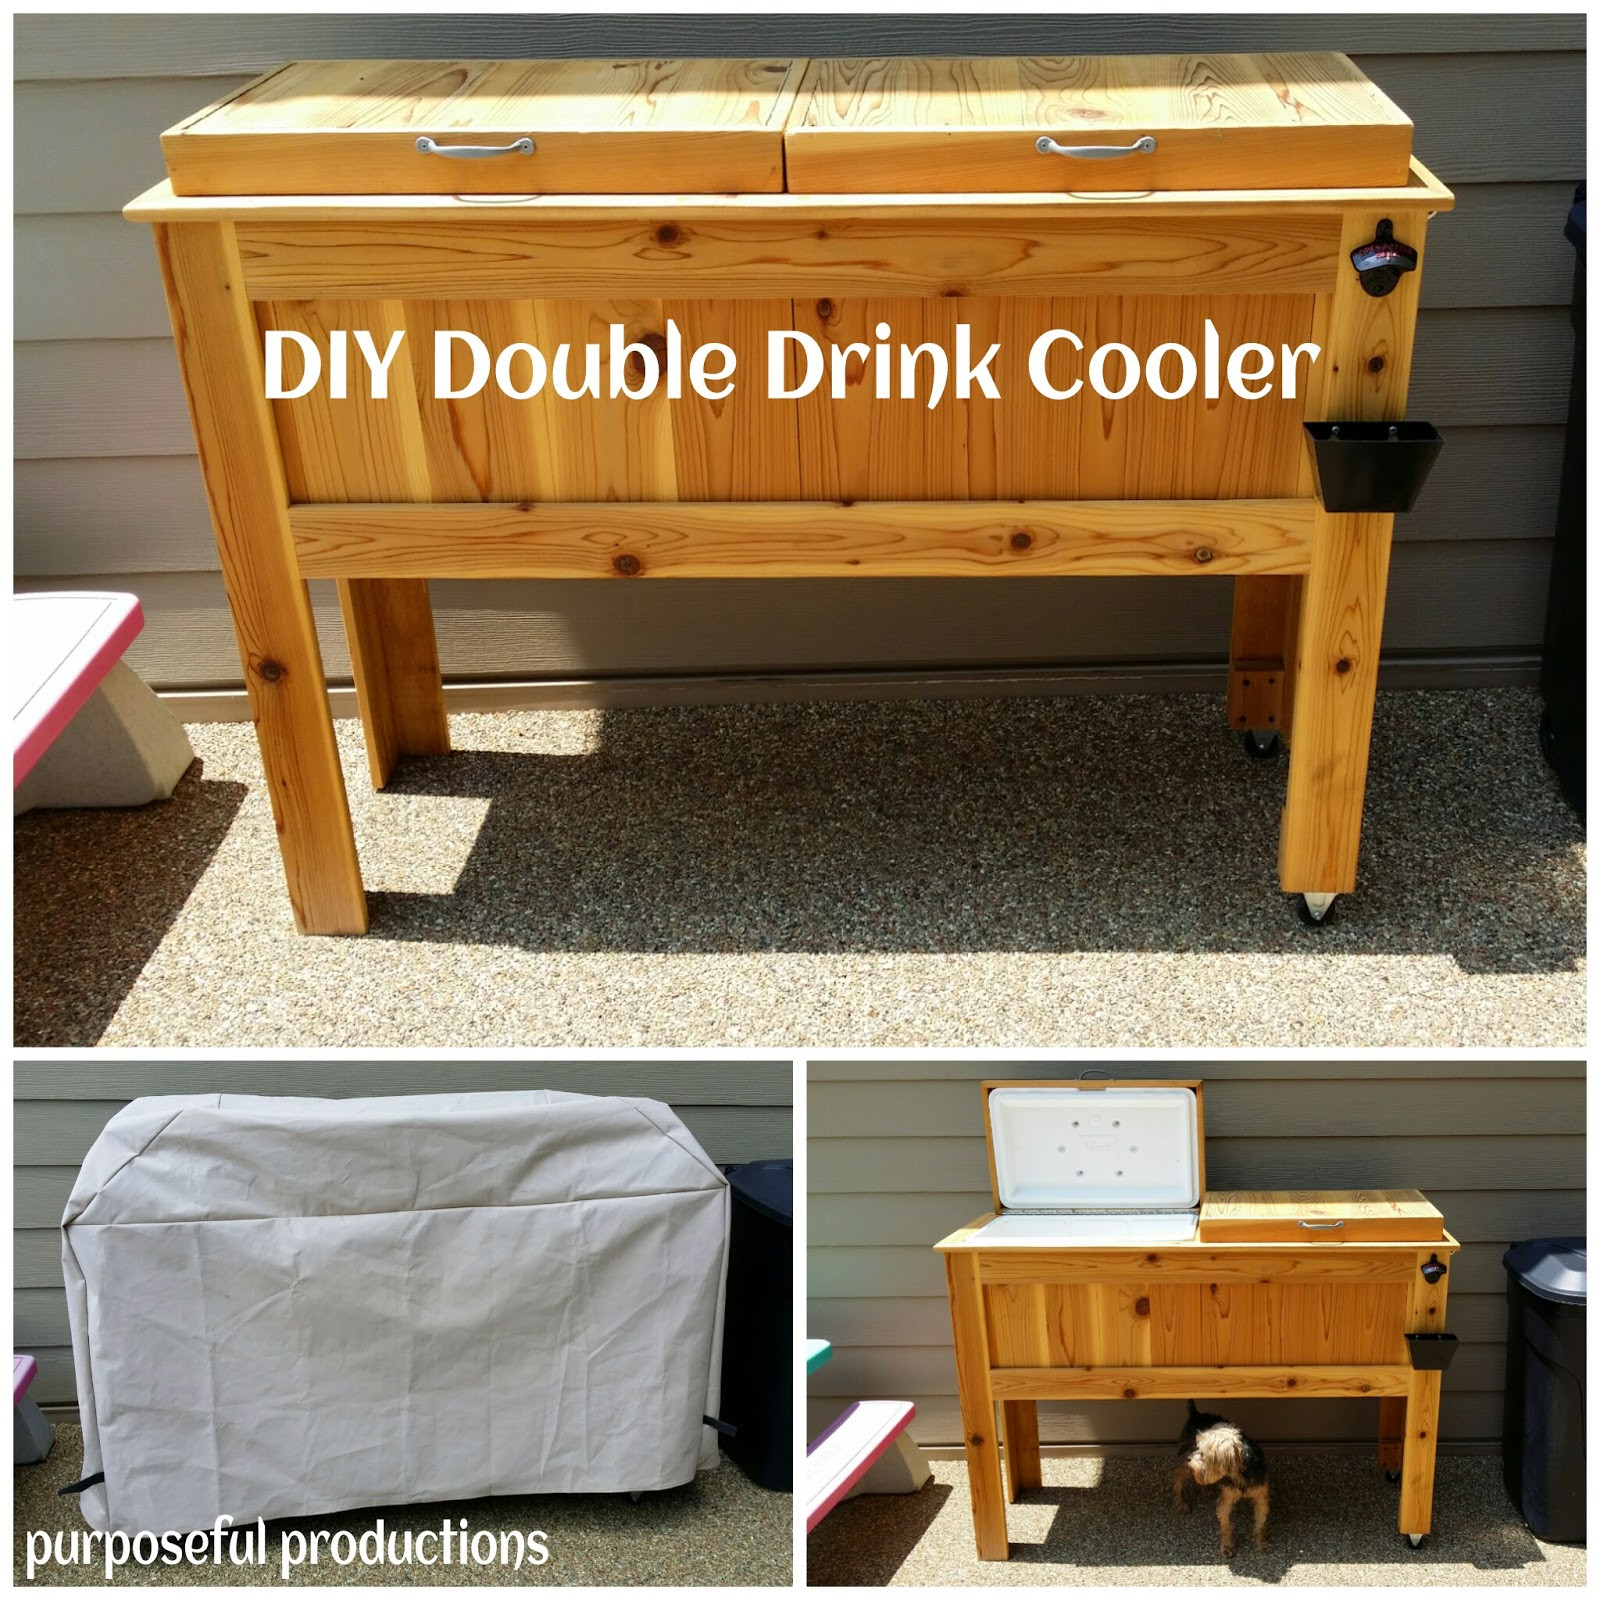 DIY Wood Cooler
 Purposeful Productions DIY Wood Drink Cooler